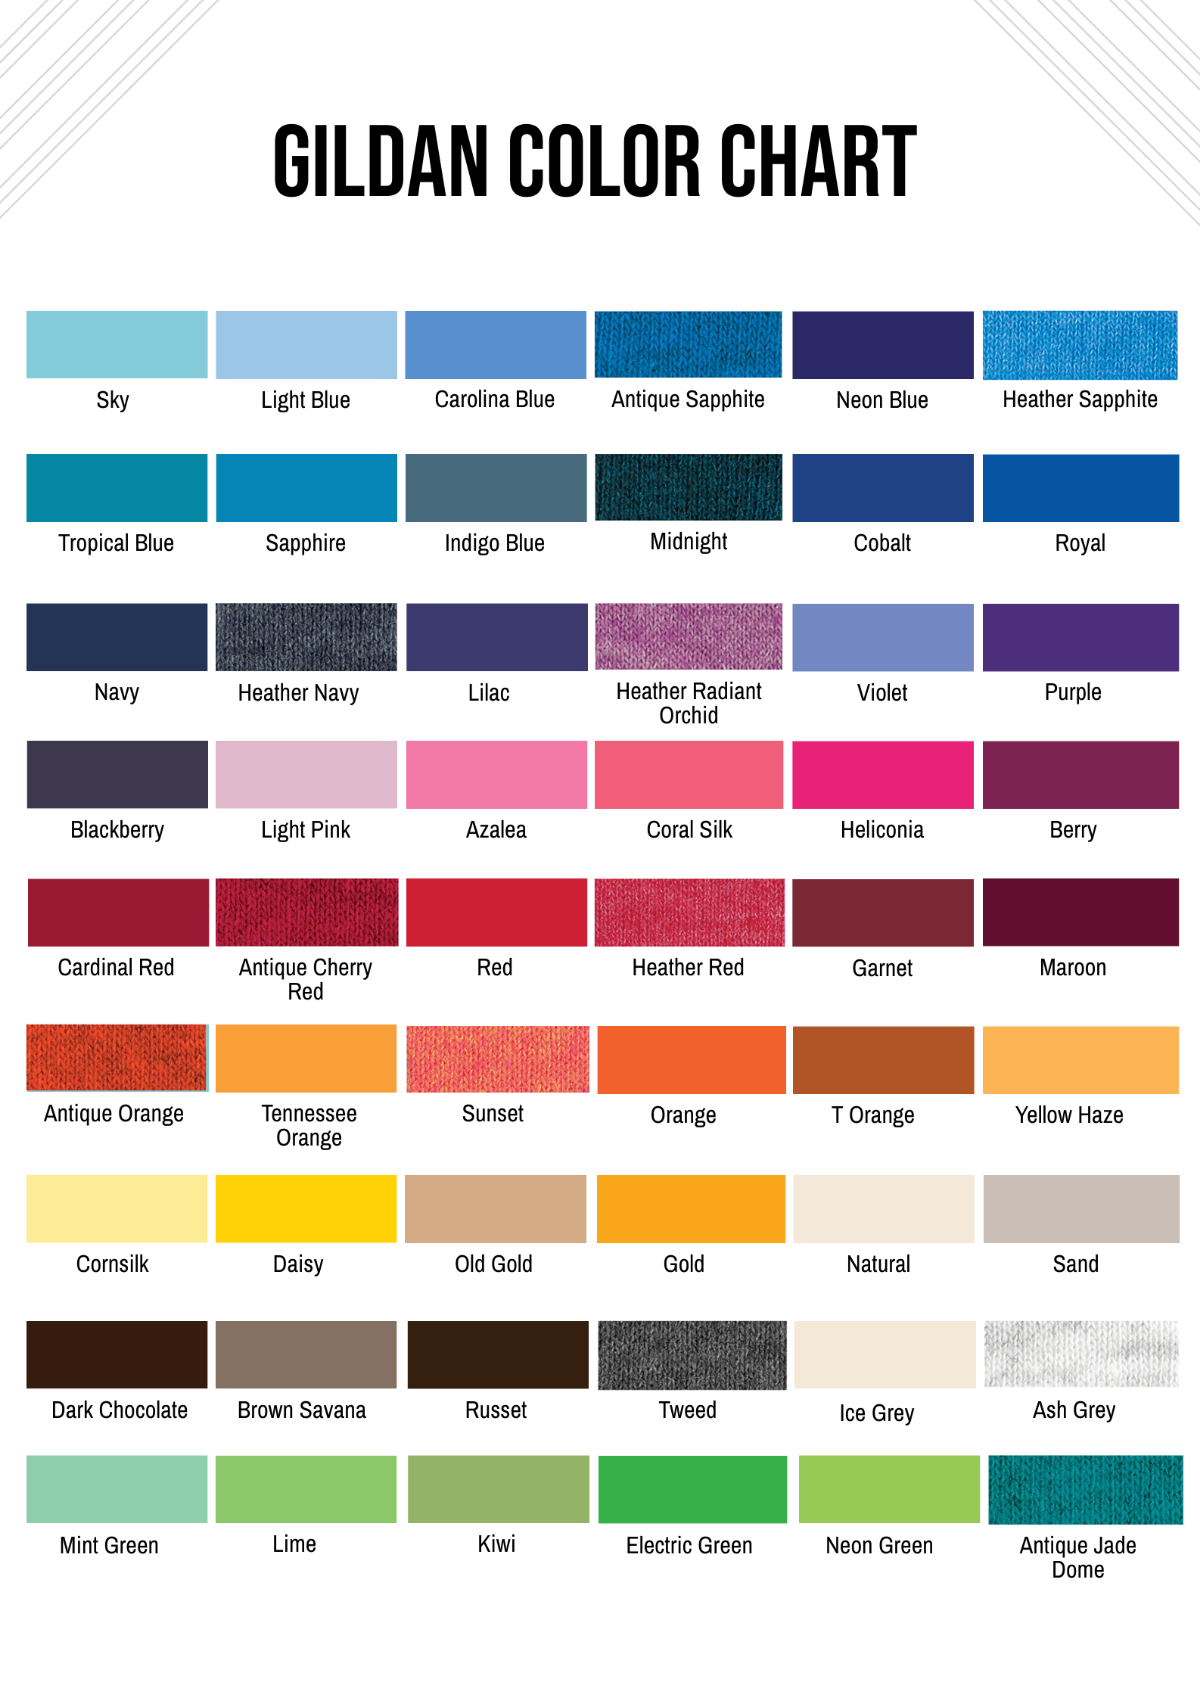 Gildan Color Chart Template